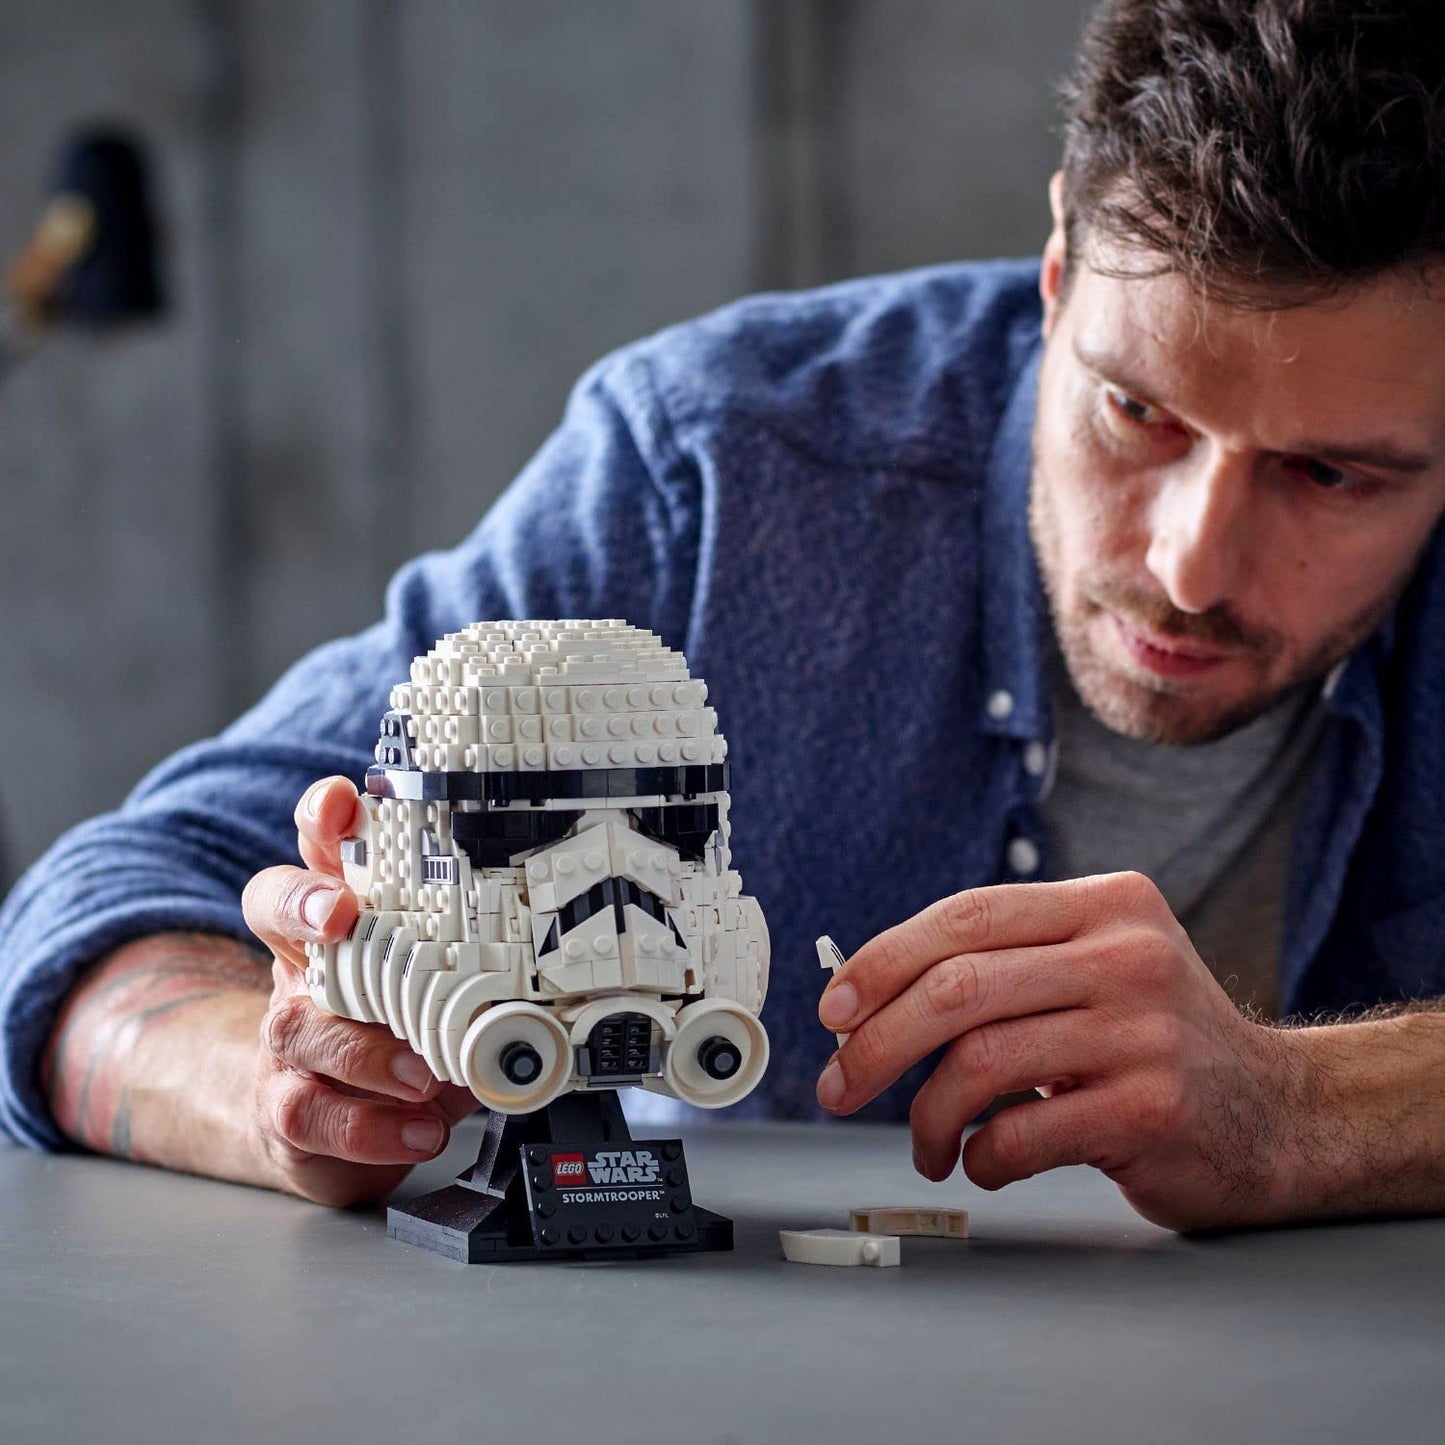 LEGO Star Wars Stormtrooper Helmet Display Building Set